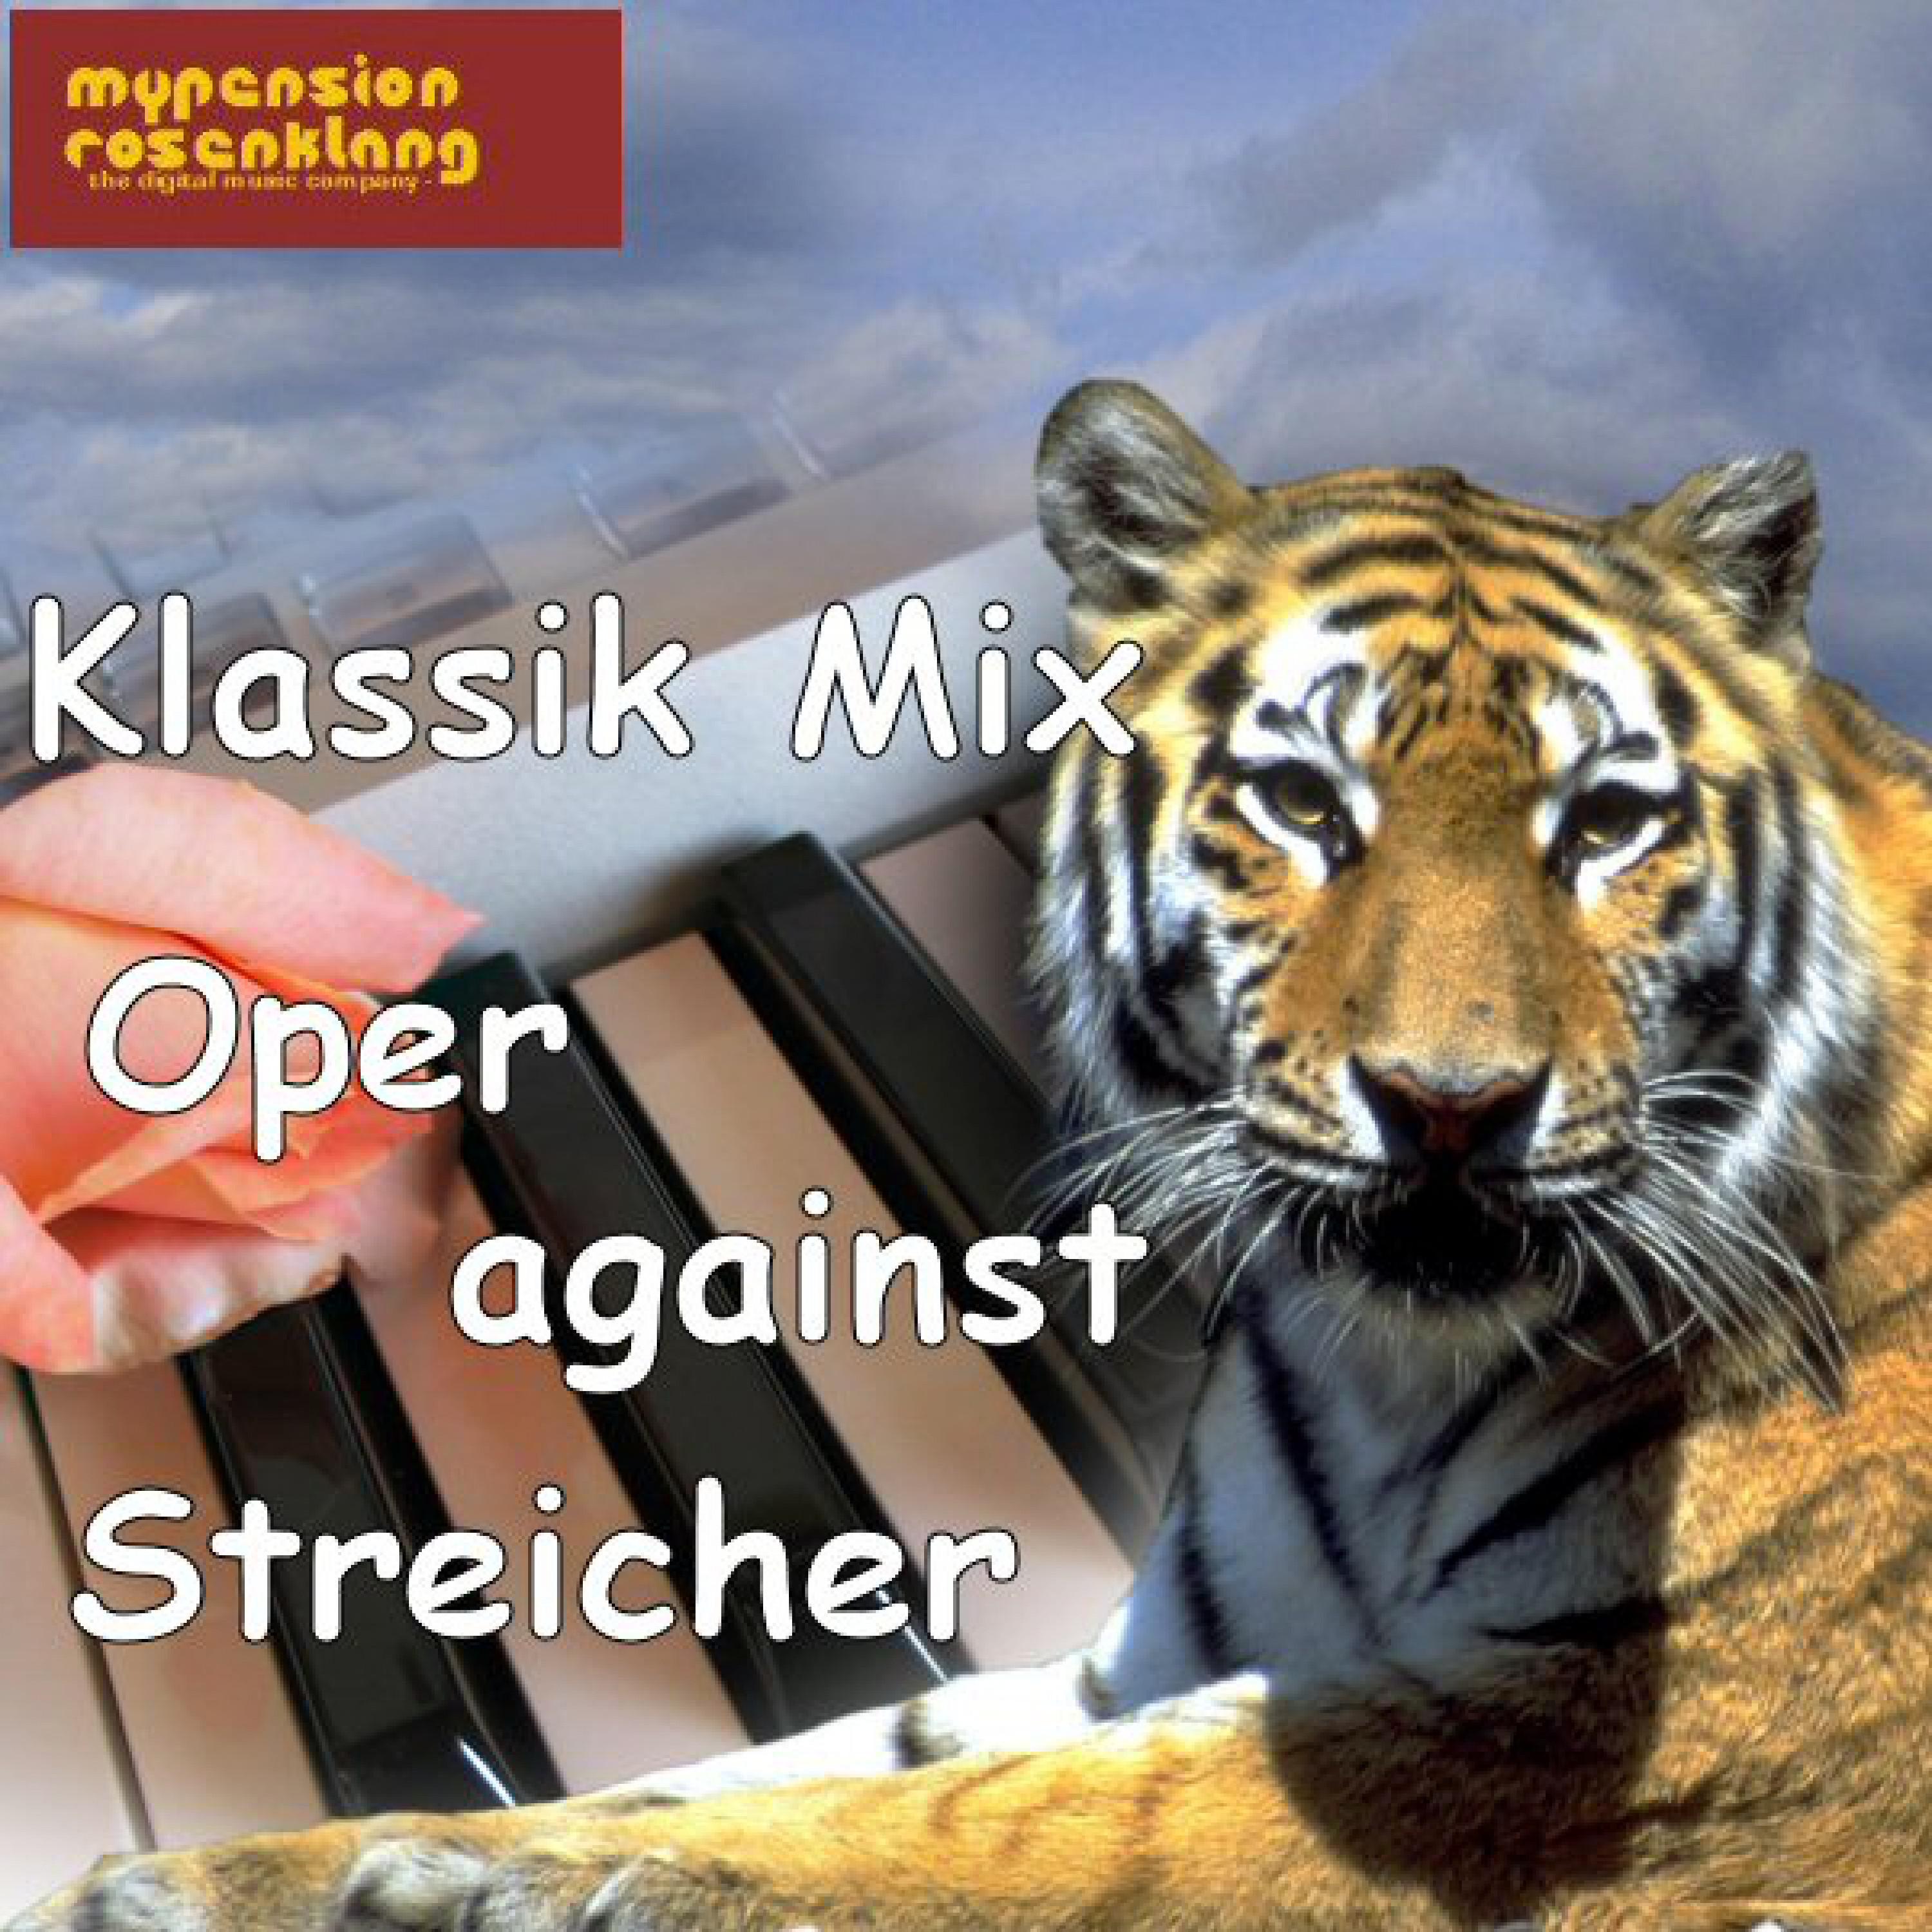 Classical Music Mix - Oper Arie Against Strings / Klassik Mix - Oper Gegen Streicher专辑